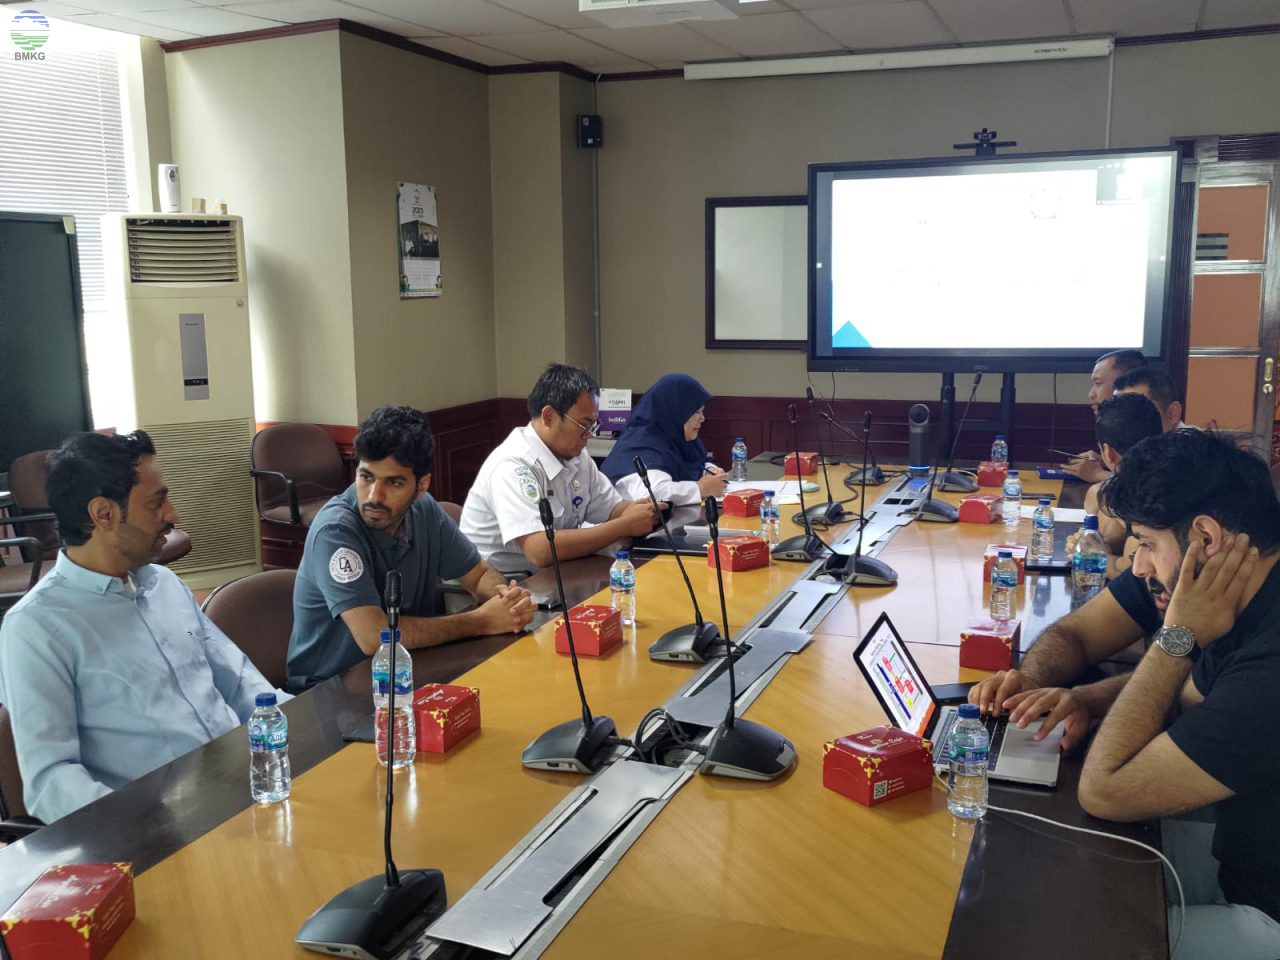 BMKG Mengadakan On The Job Training of DGMET Oman for Earthquake and Tsunami Procedure 